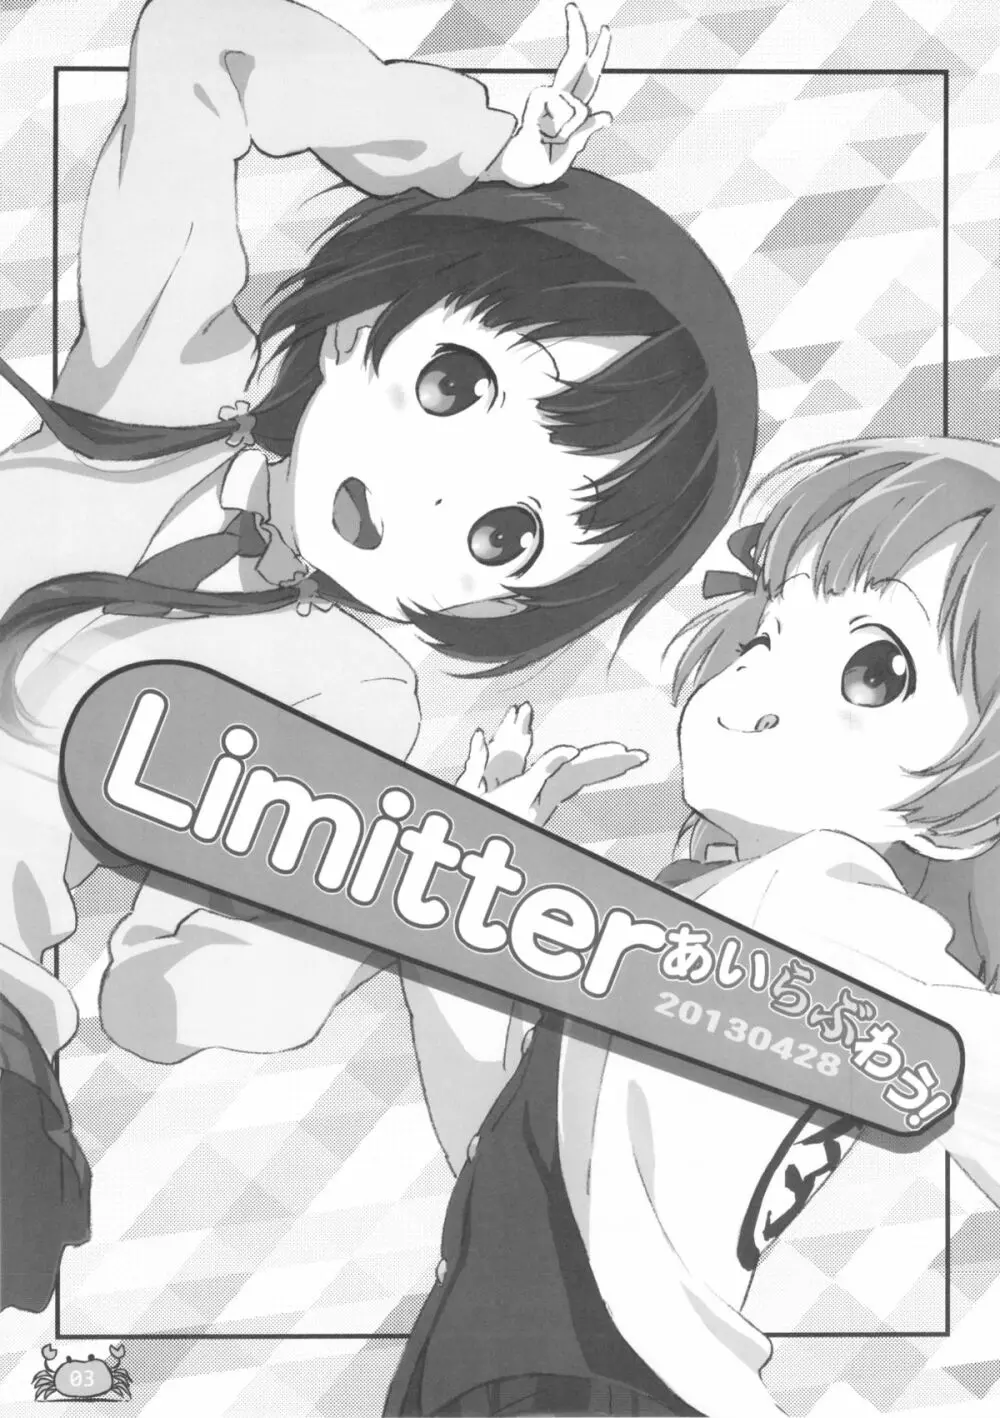 Limitter あいらぶわう！ 20130428 - page3